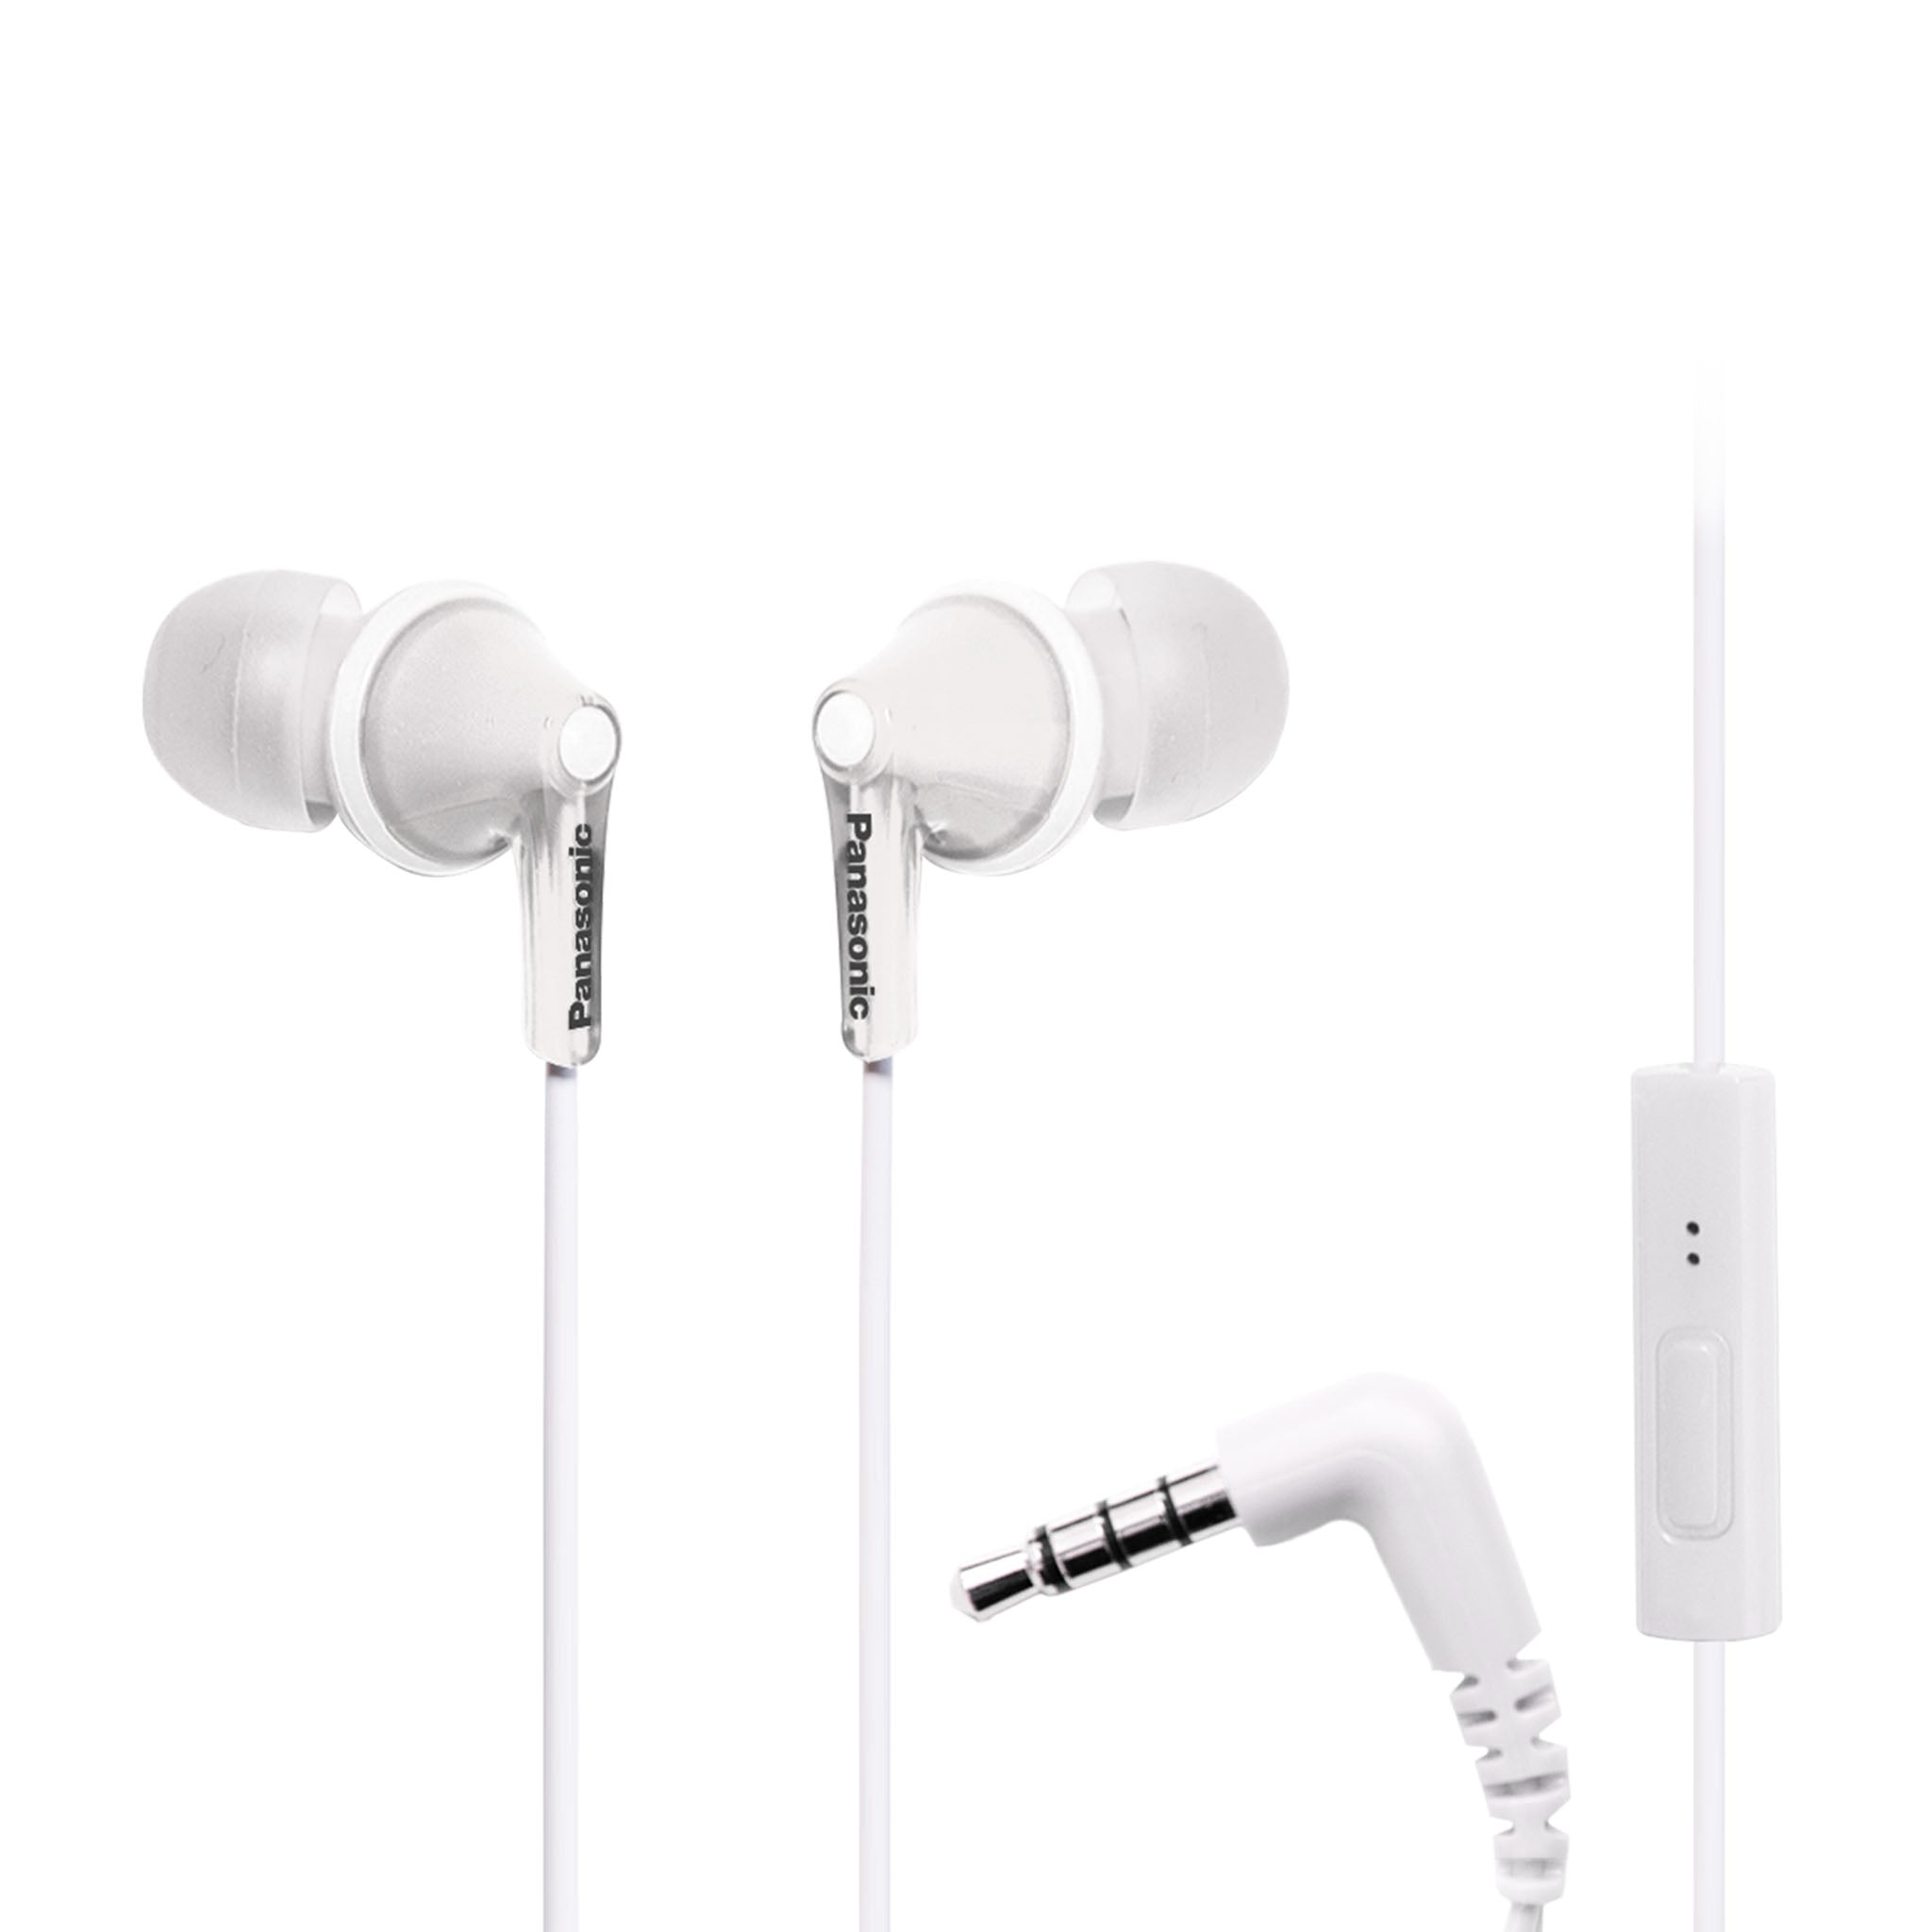 Panasonic ErgoFit In-Ear Earbud Microphone - Headphones RP-TCM125 with